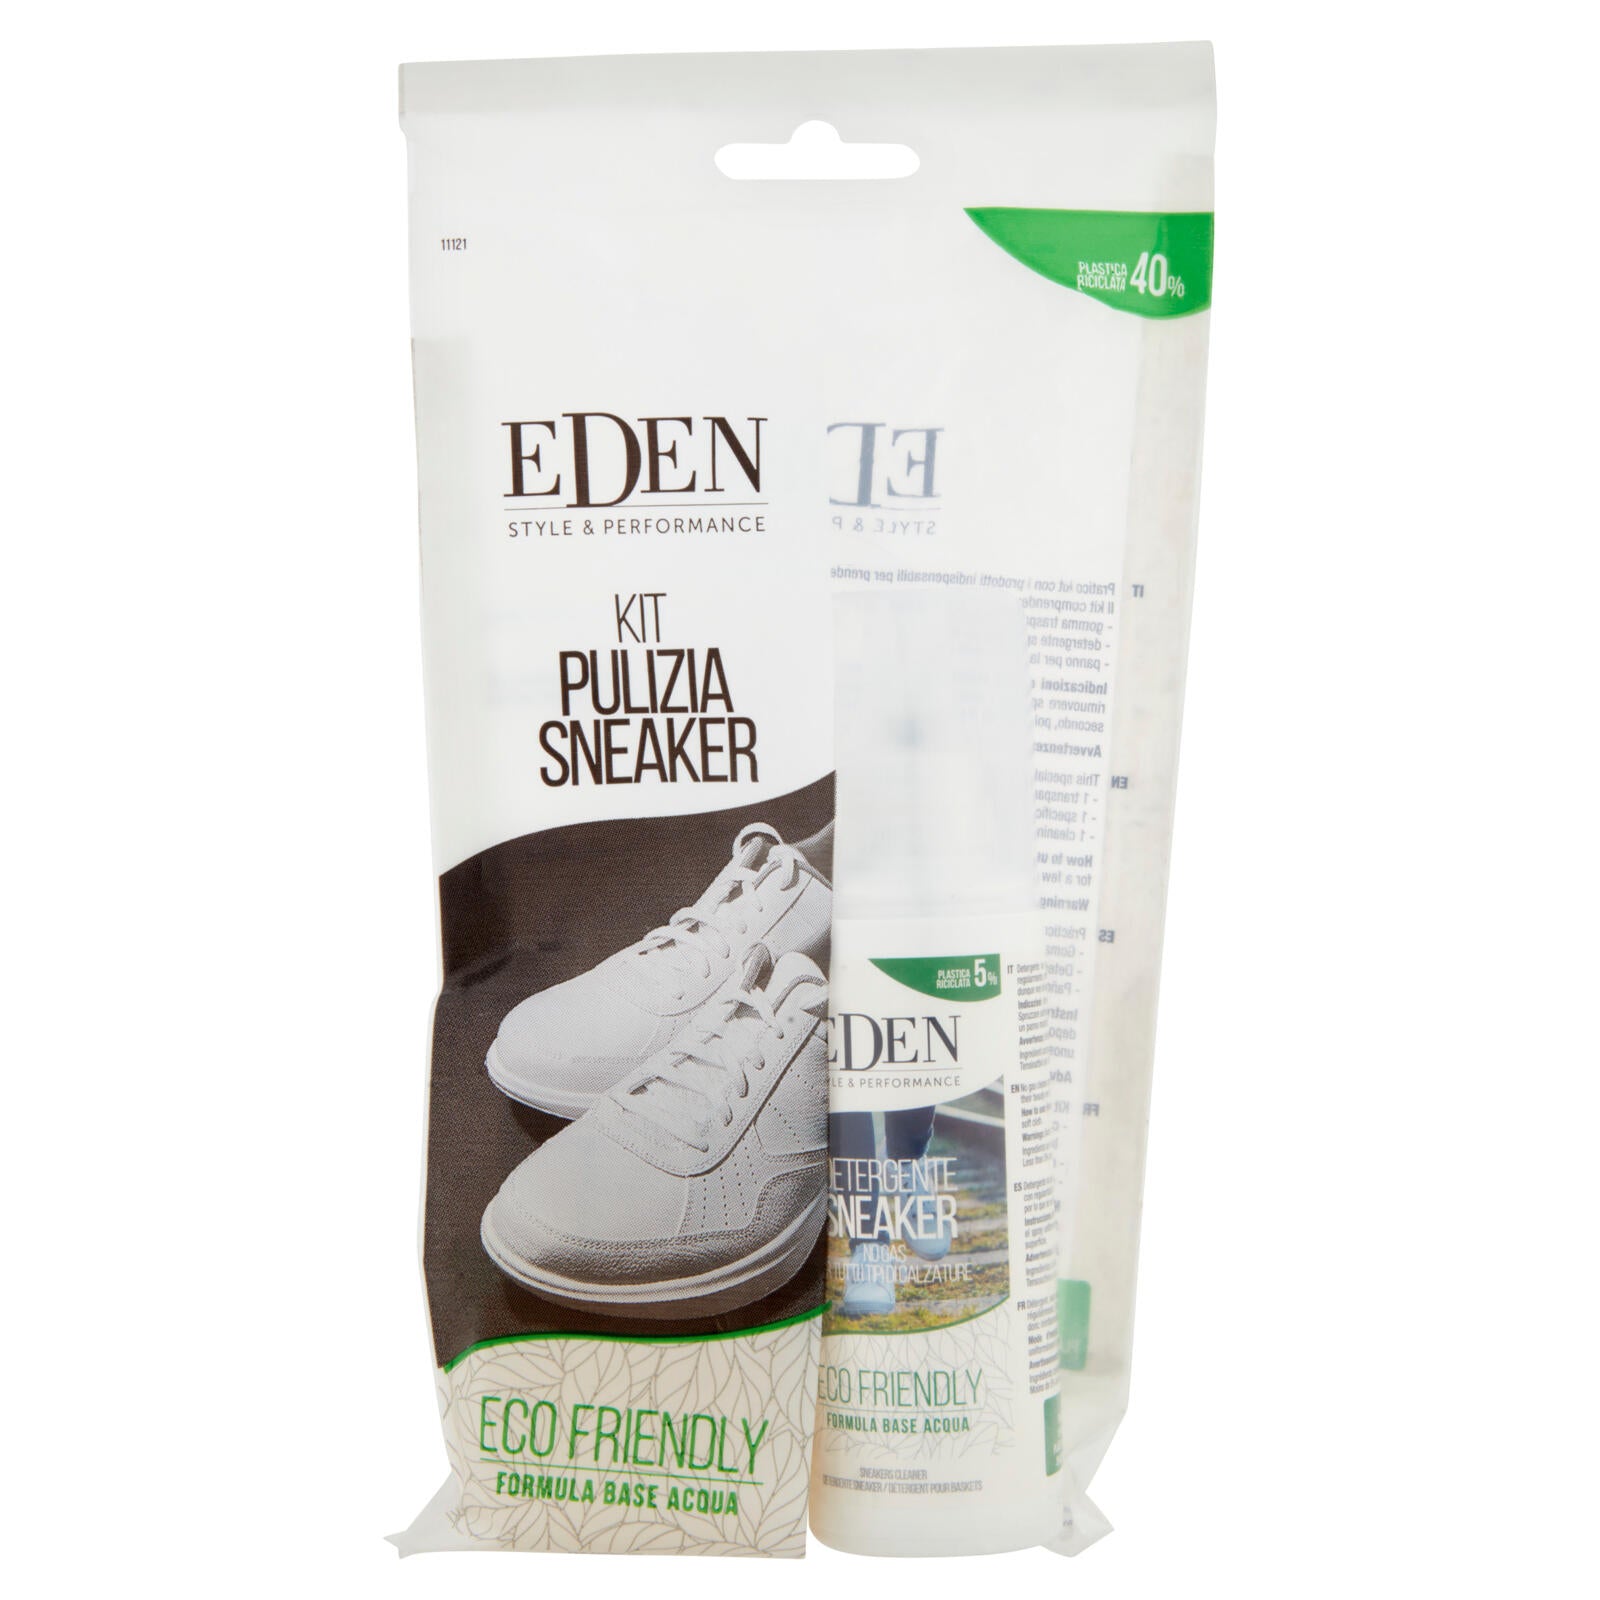 Eden Style & Performance Kit Pulizia Sneaker 100 ml ->